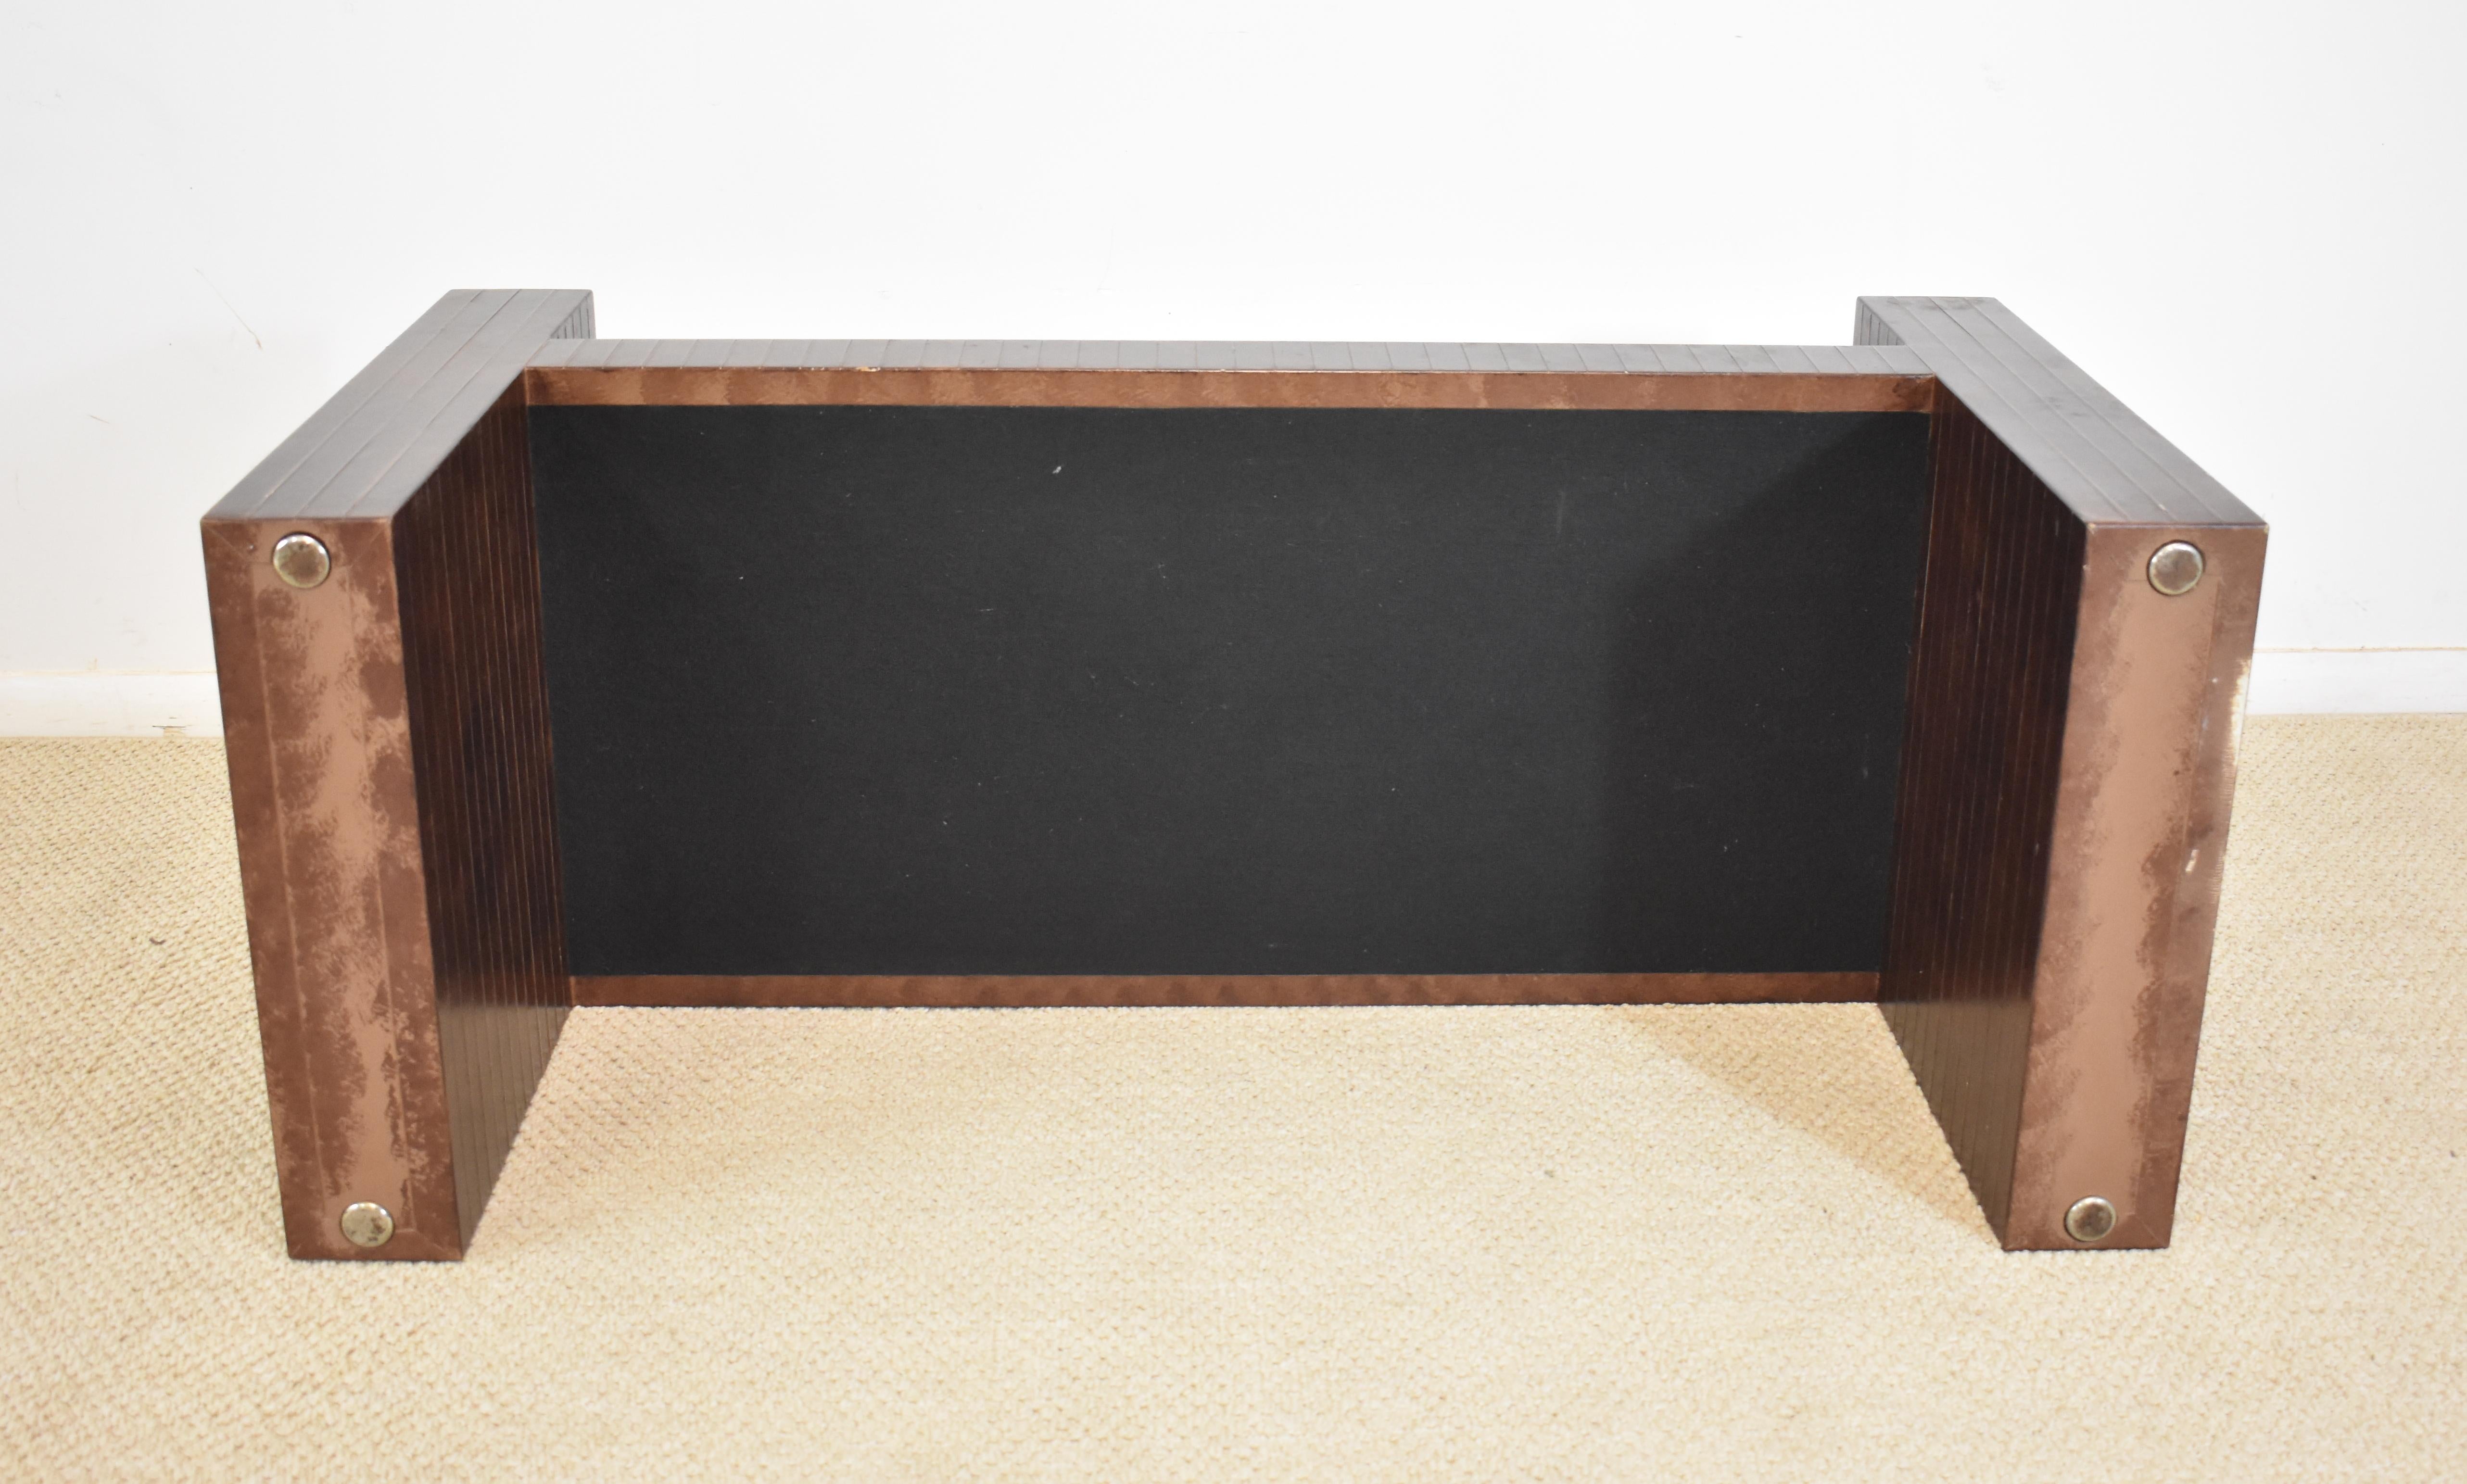 Modern Sculptural Bench Clad in Scored Brown Leather by Karl Springer For Sale 2